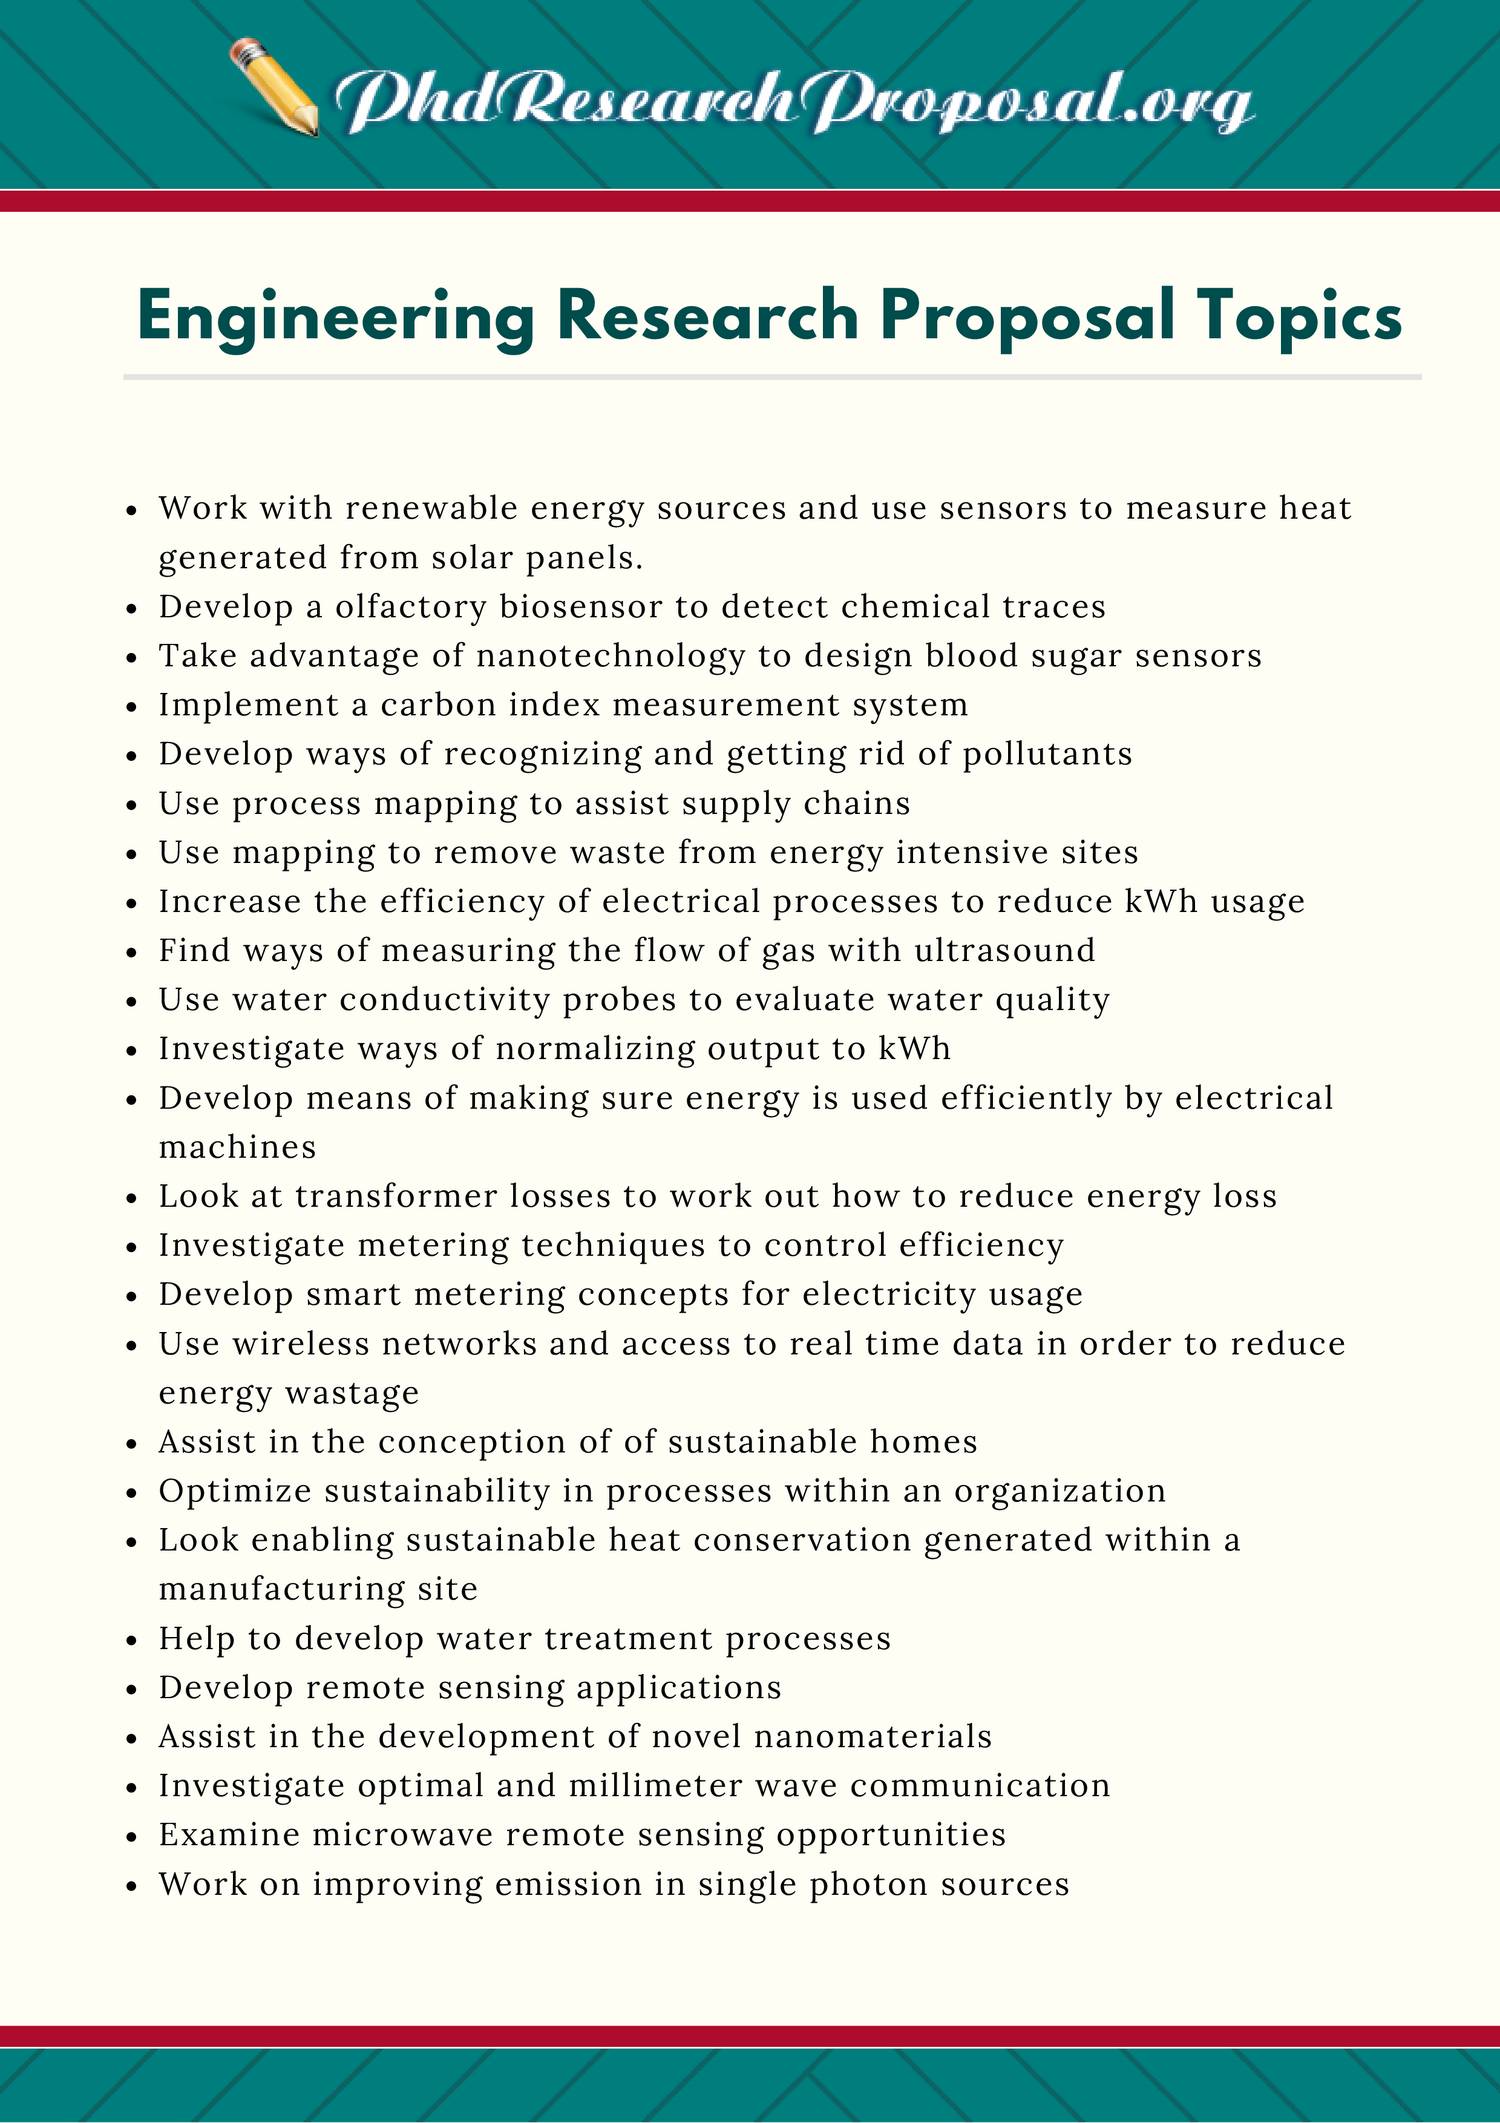 gis research proposal topics